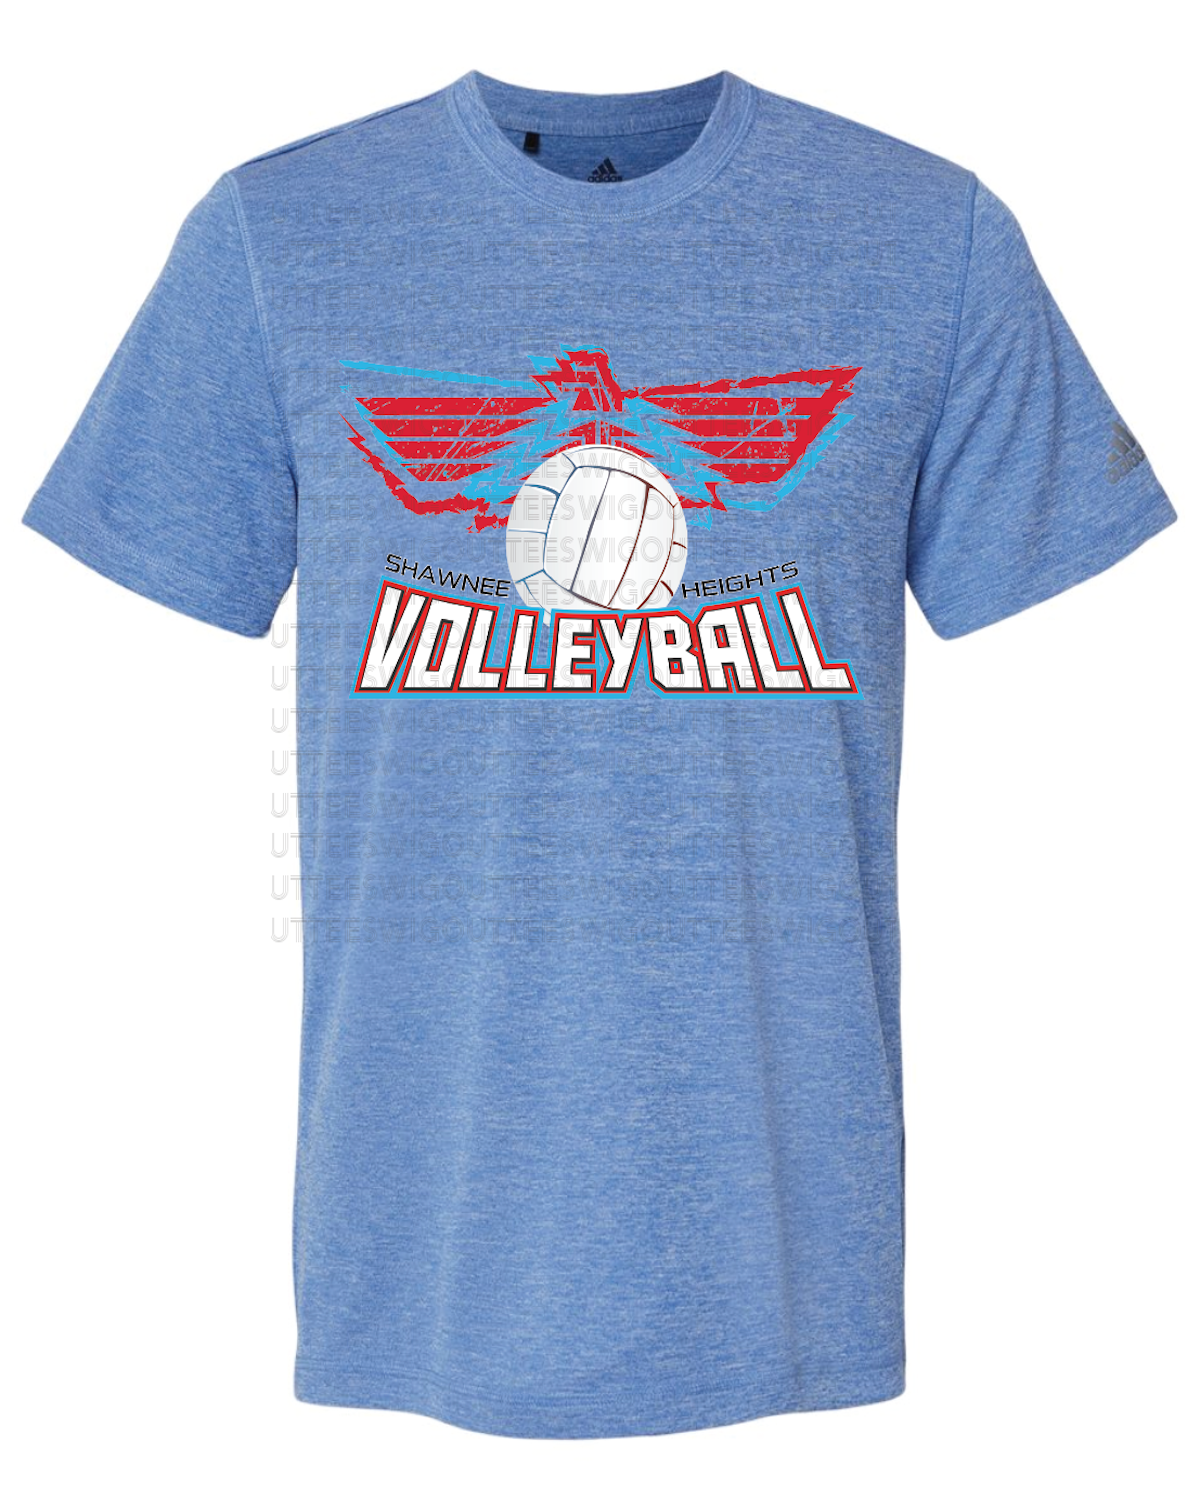 Shawnee Heights Volleyball Adidas Sports T-shirt